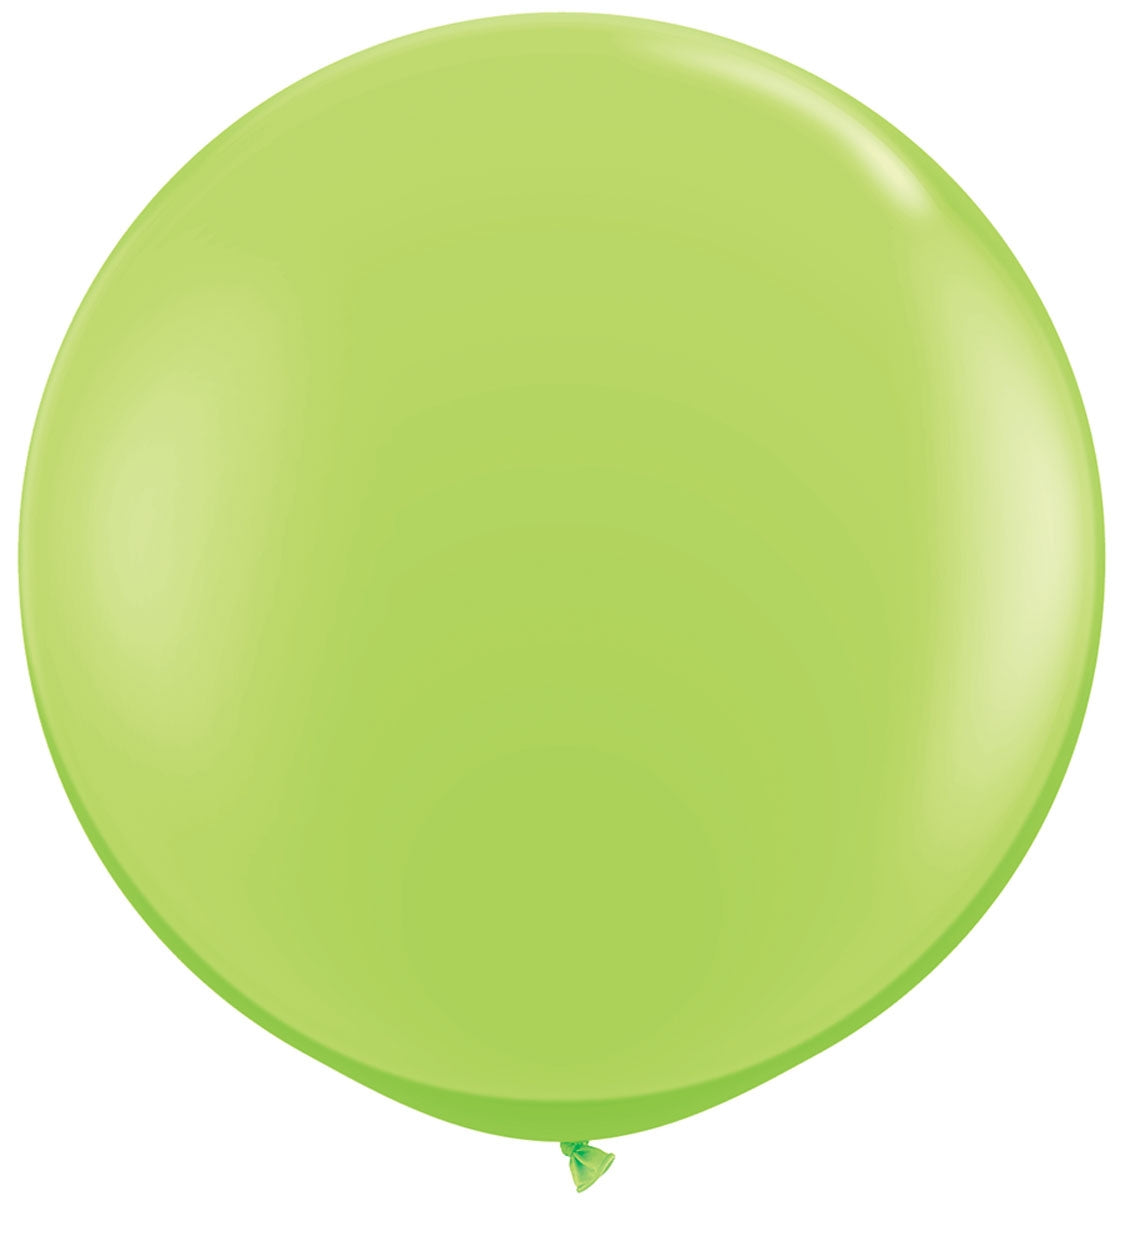 Giant Balloon: Green